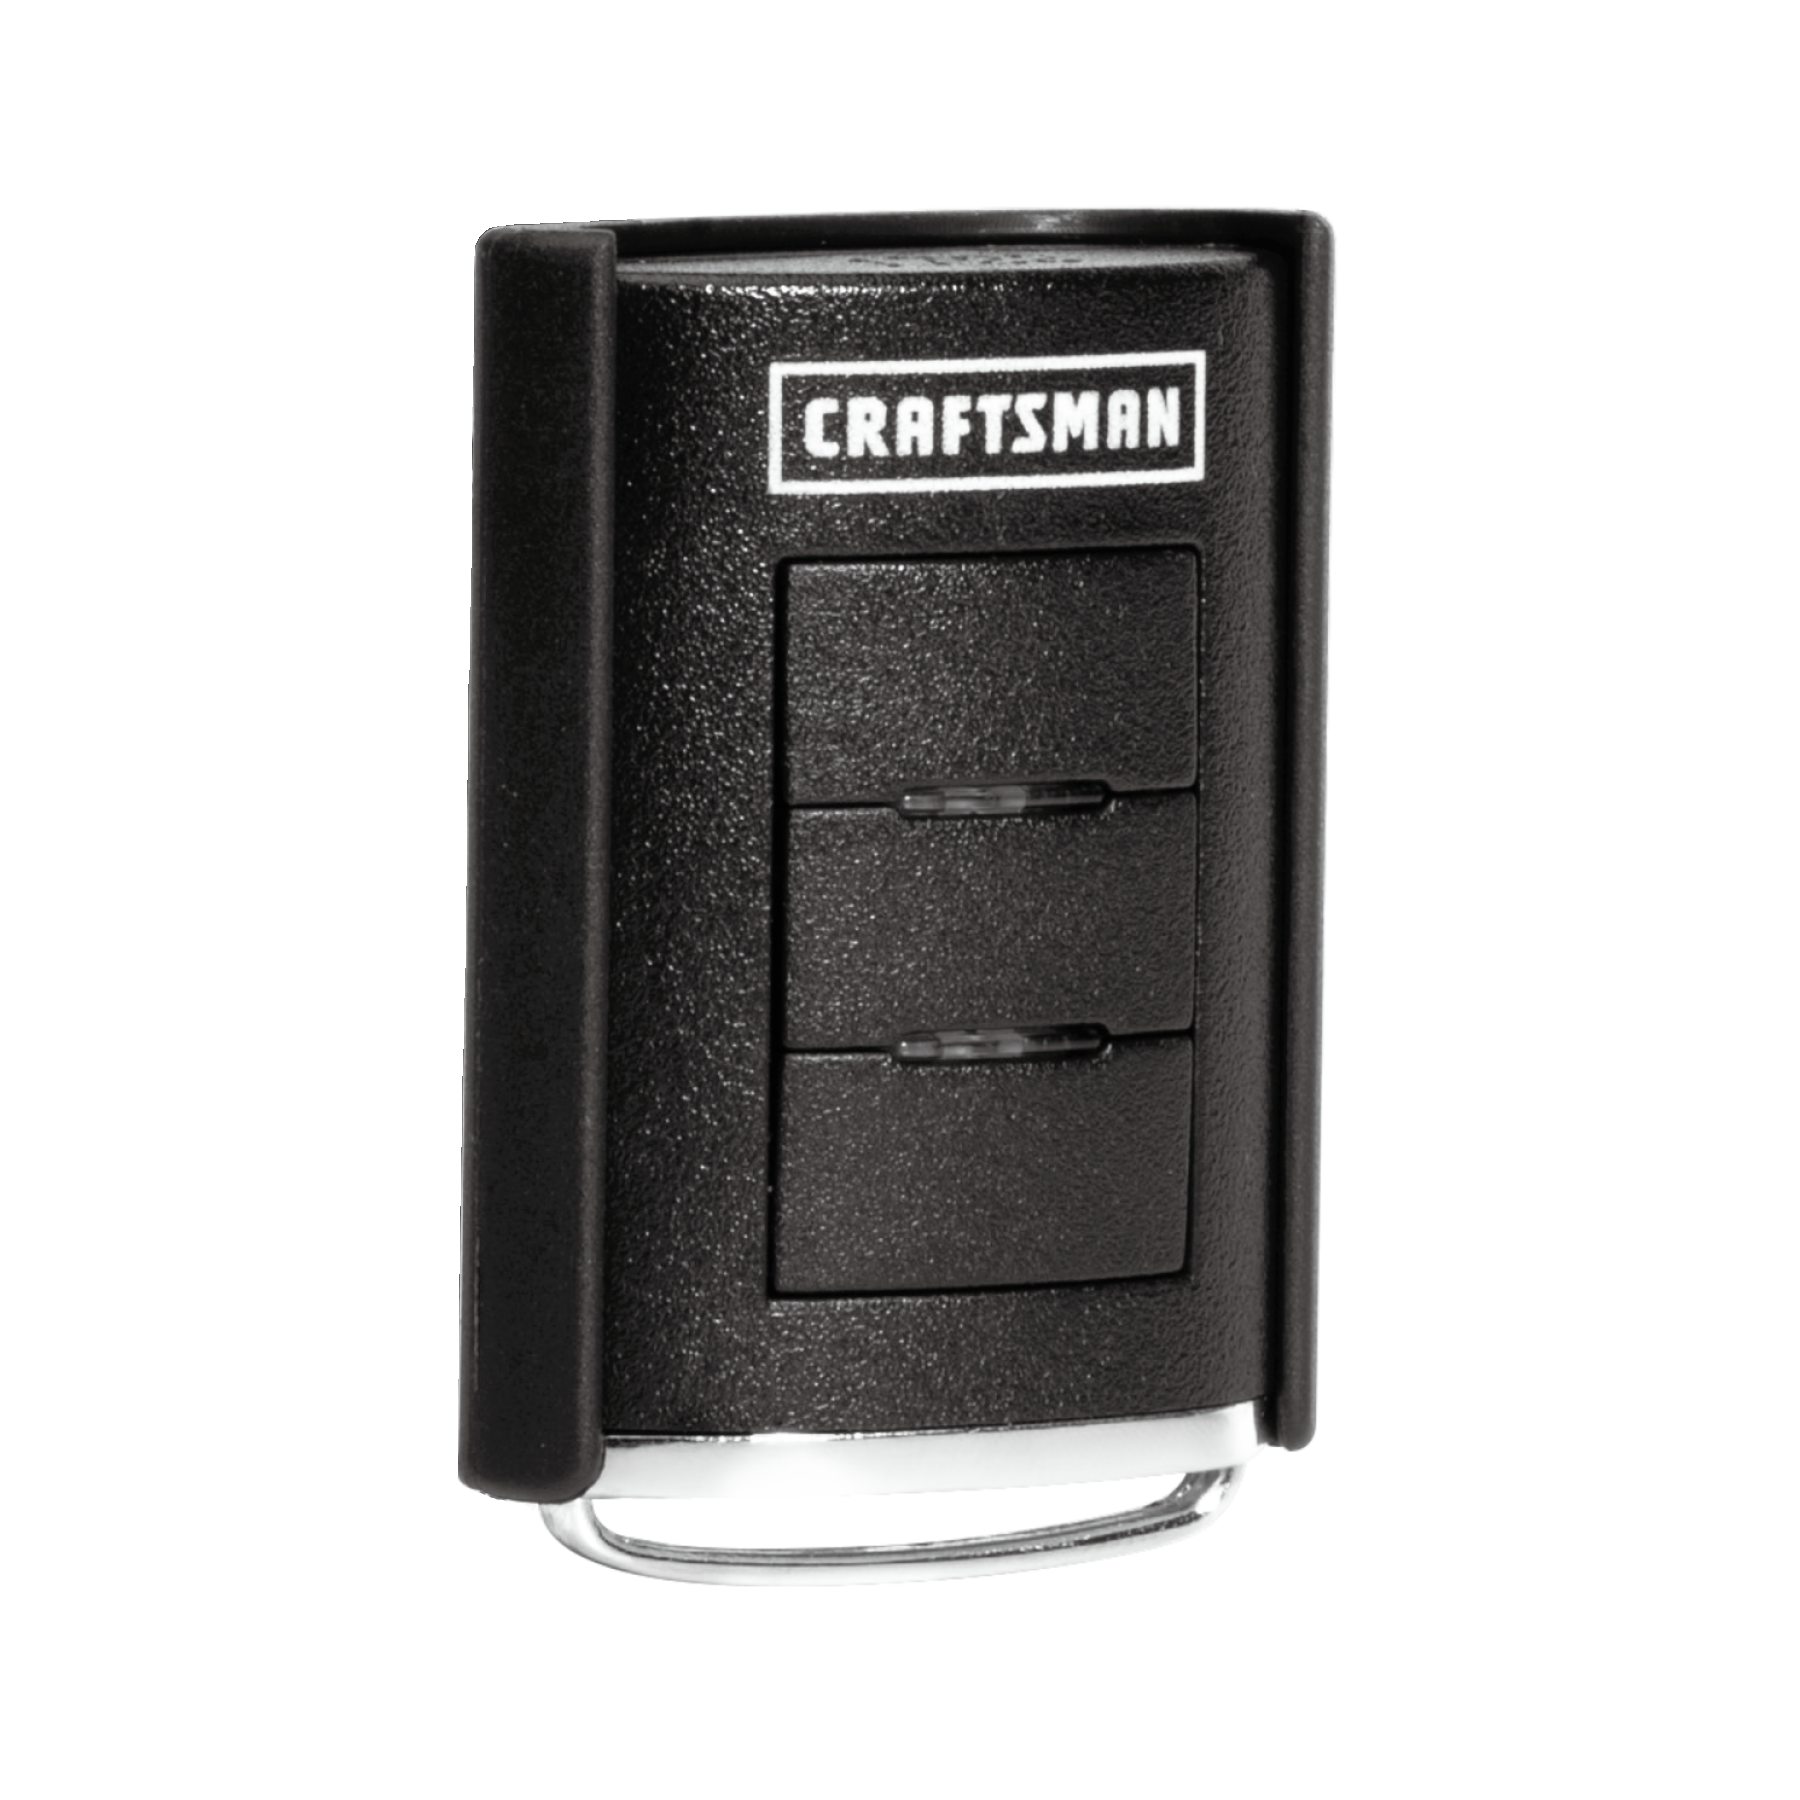 Craftsman Series 100 3 Button Remote Control For Series 100 Garage Door Openers